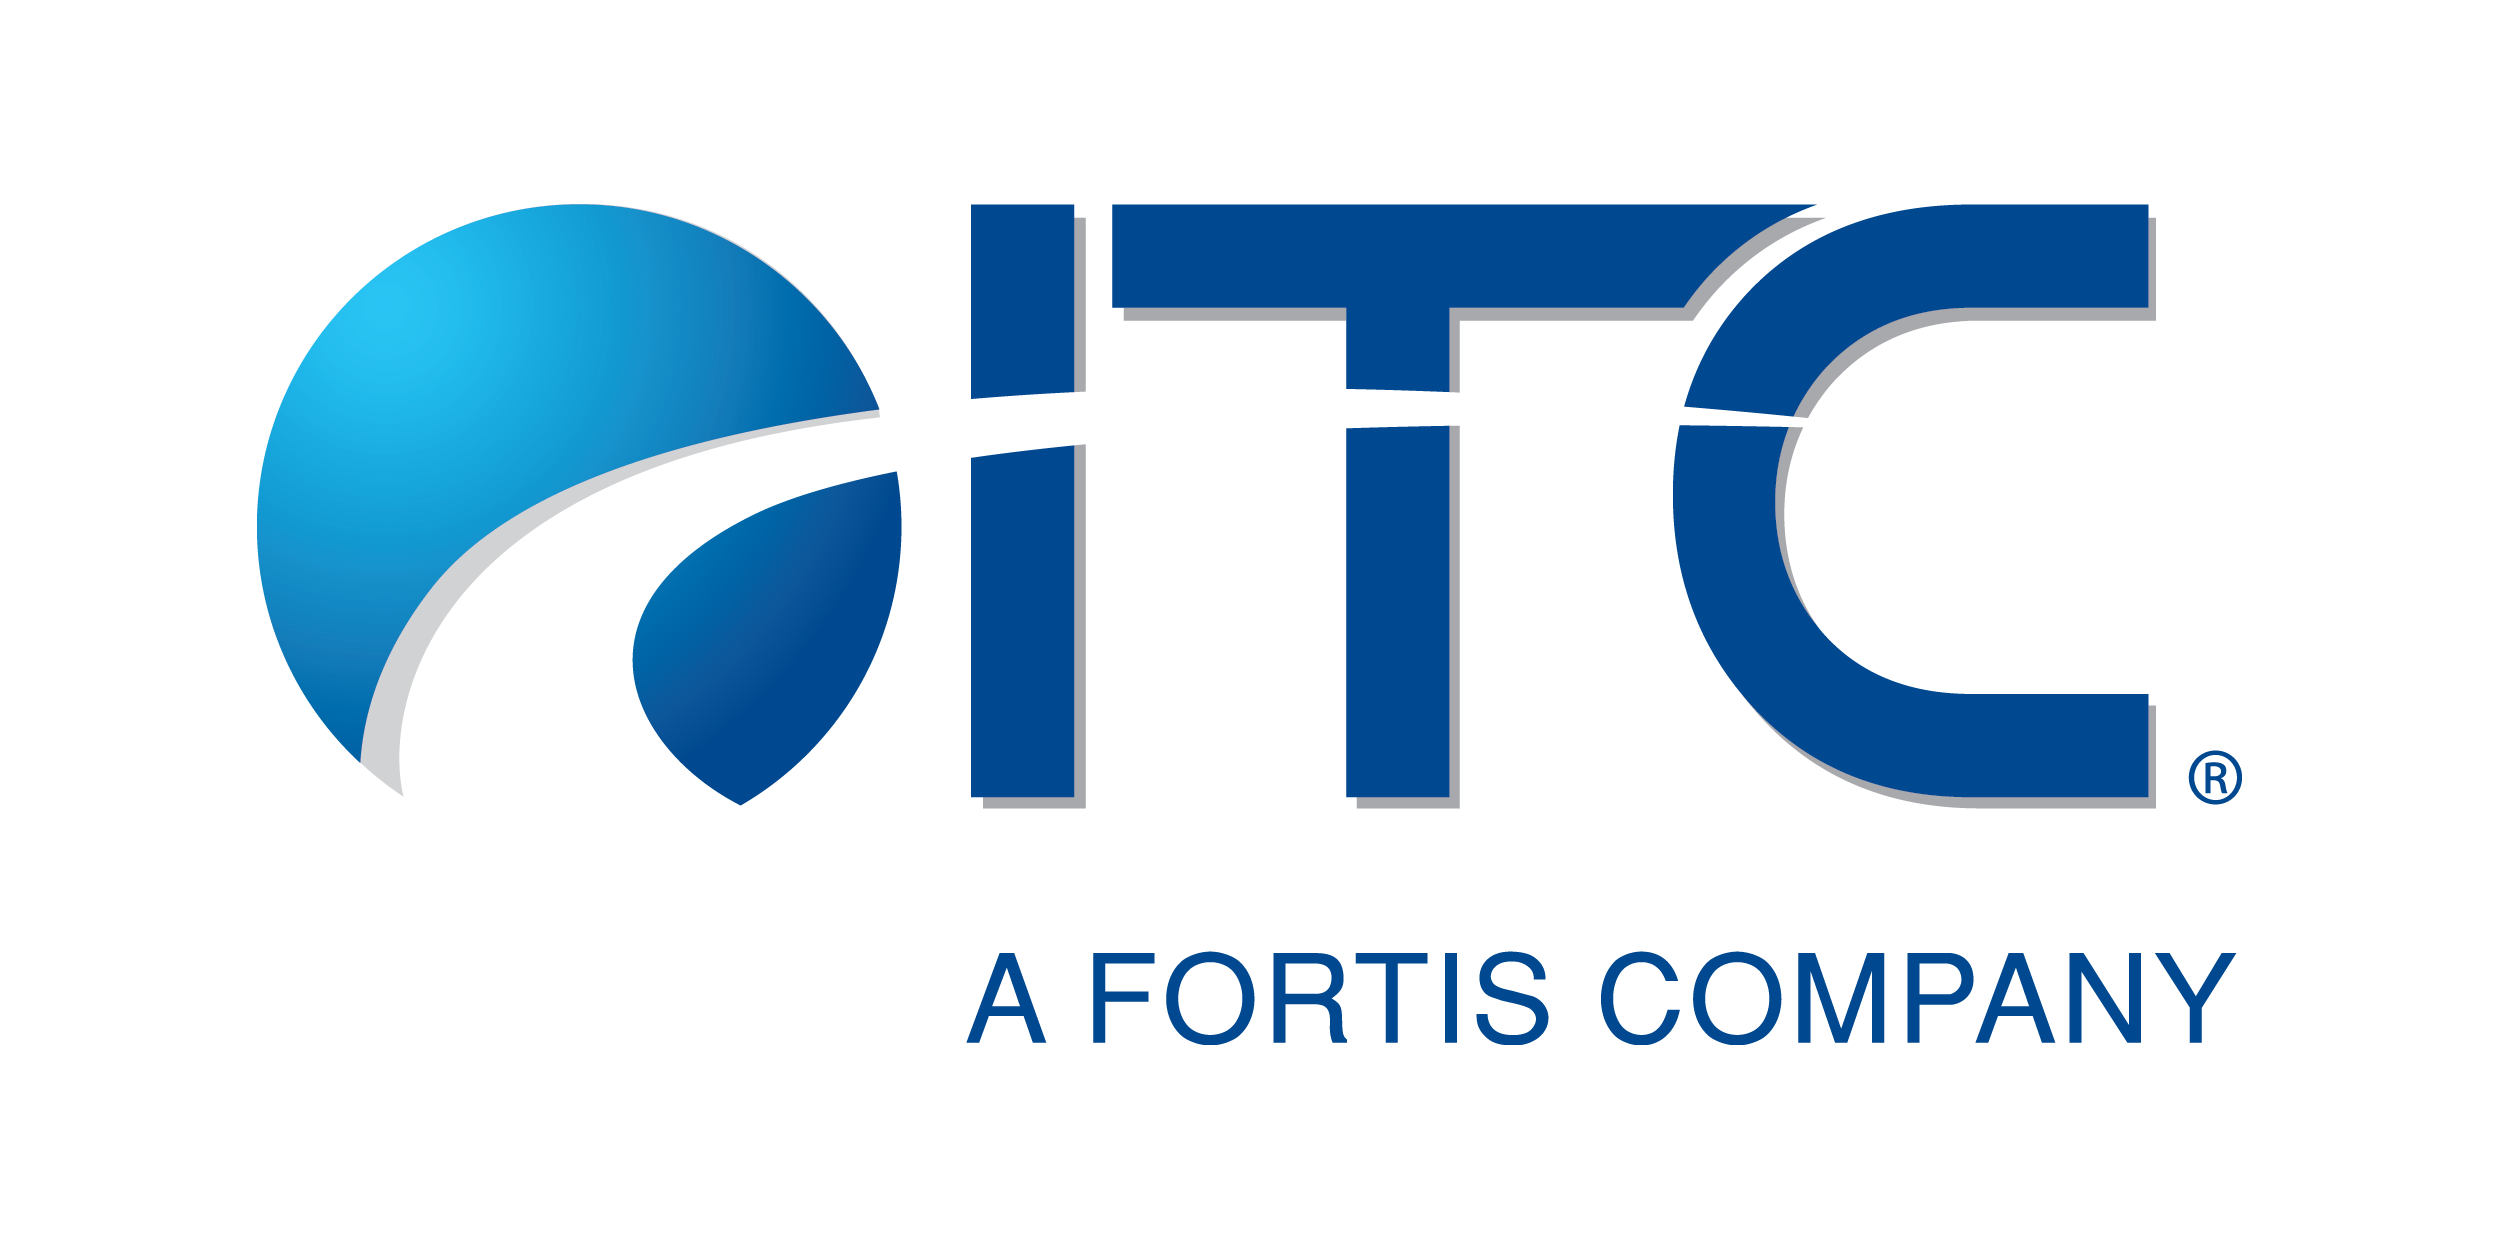 ITC Holdings logo. A Fortis Company